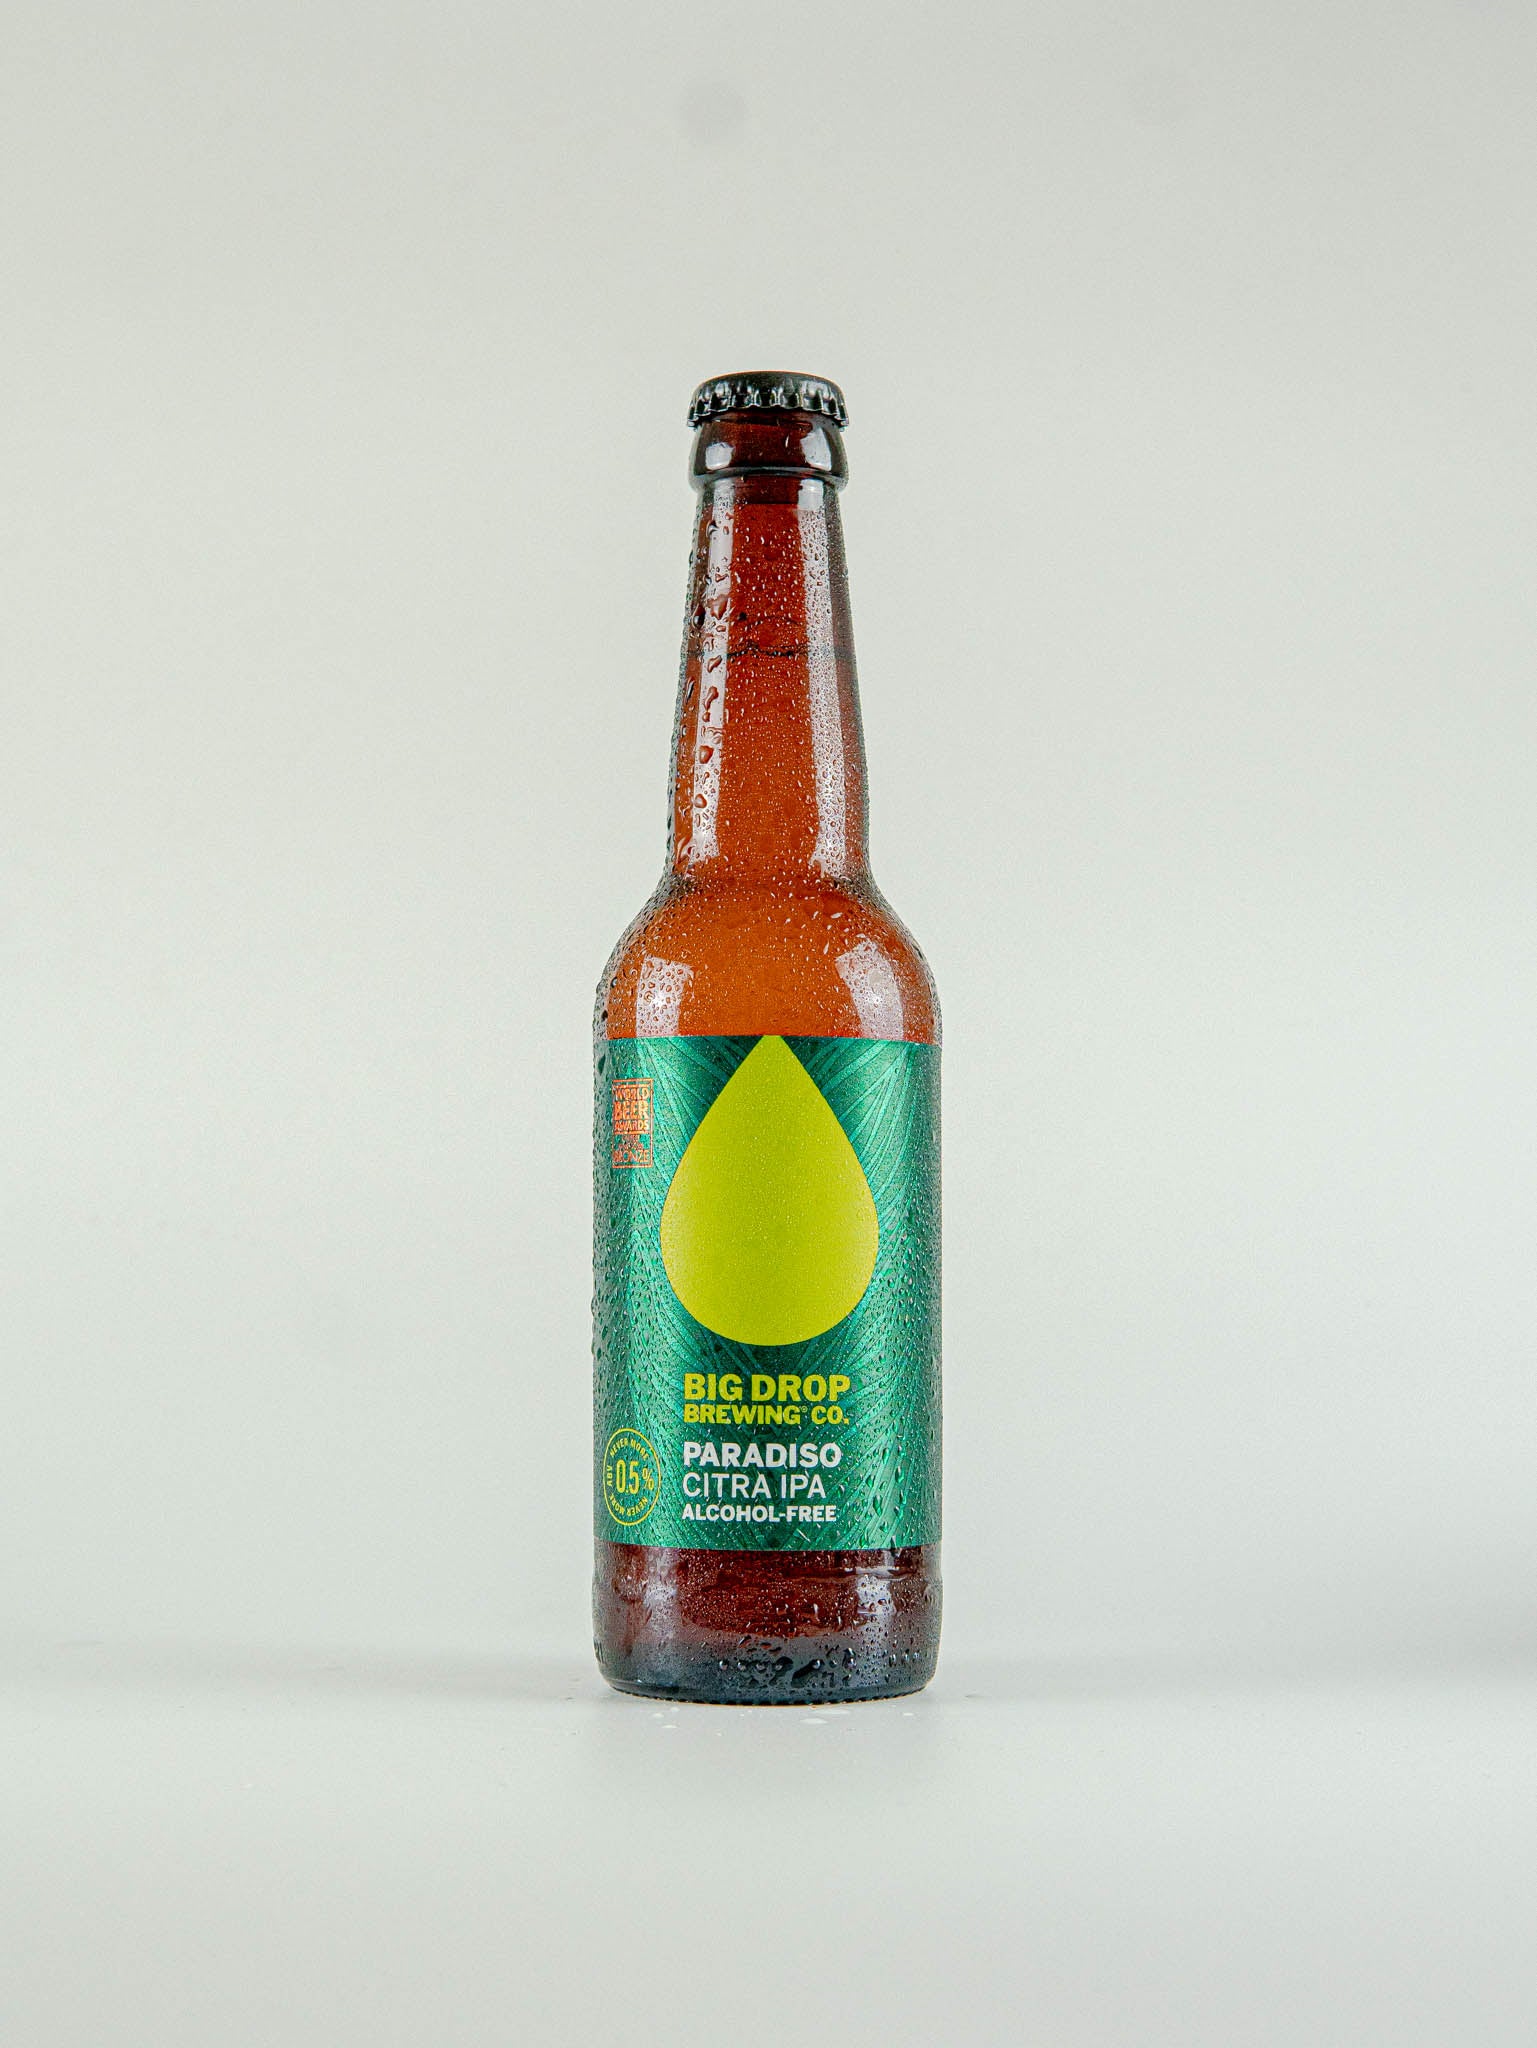 Big Drop Brew Paradiso Citra IPA 0.5% - 330ml - LightDrinks